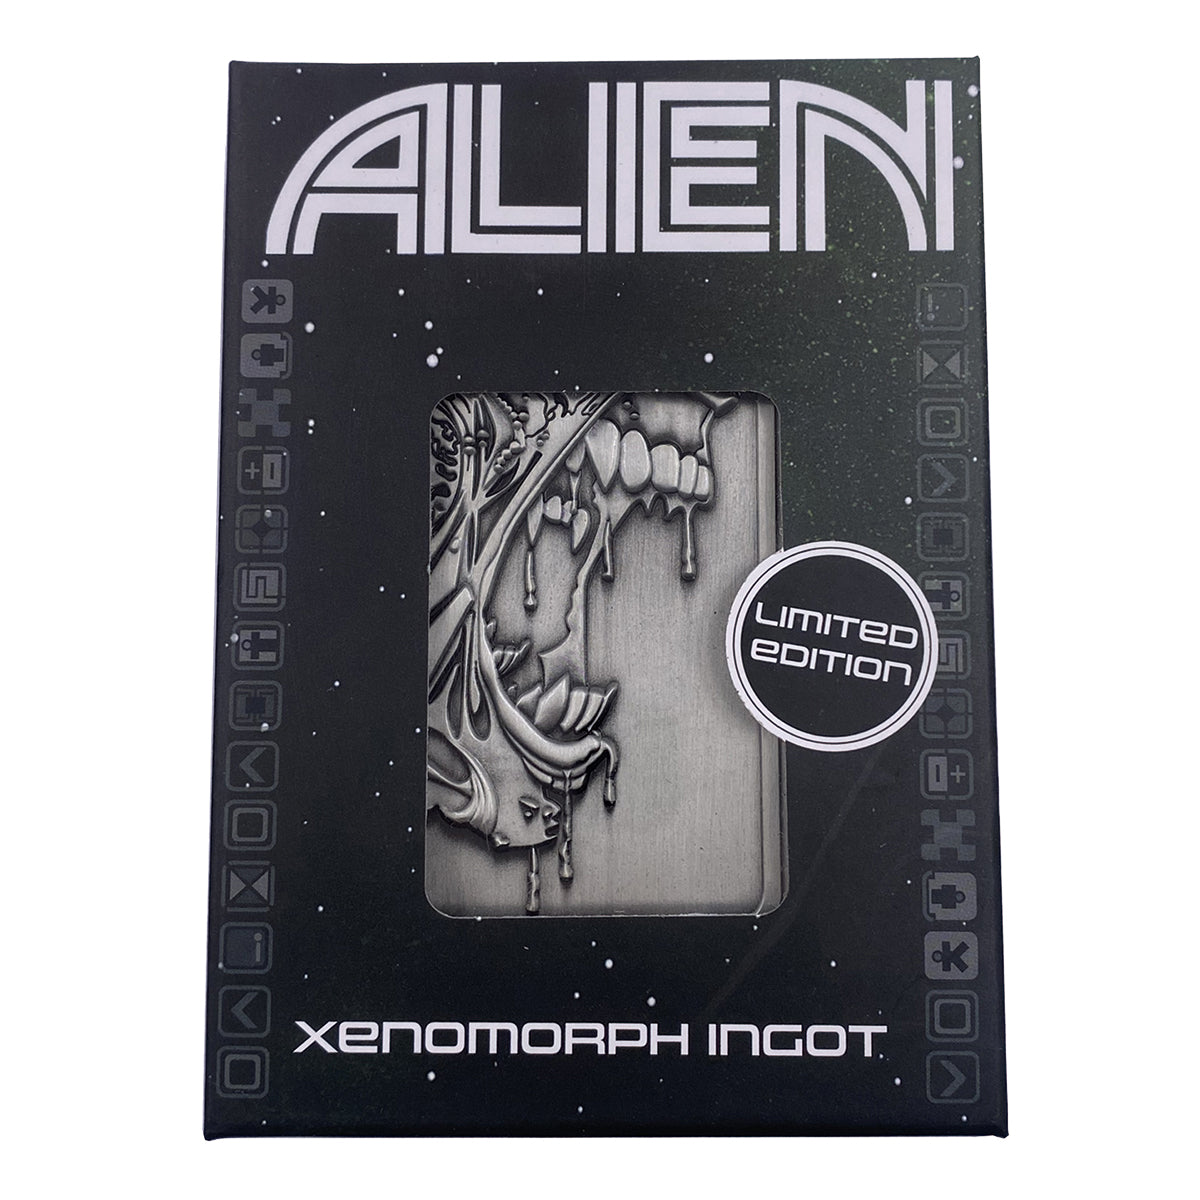 Alien Limited Edition Xenomorph Ingot